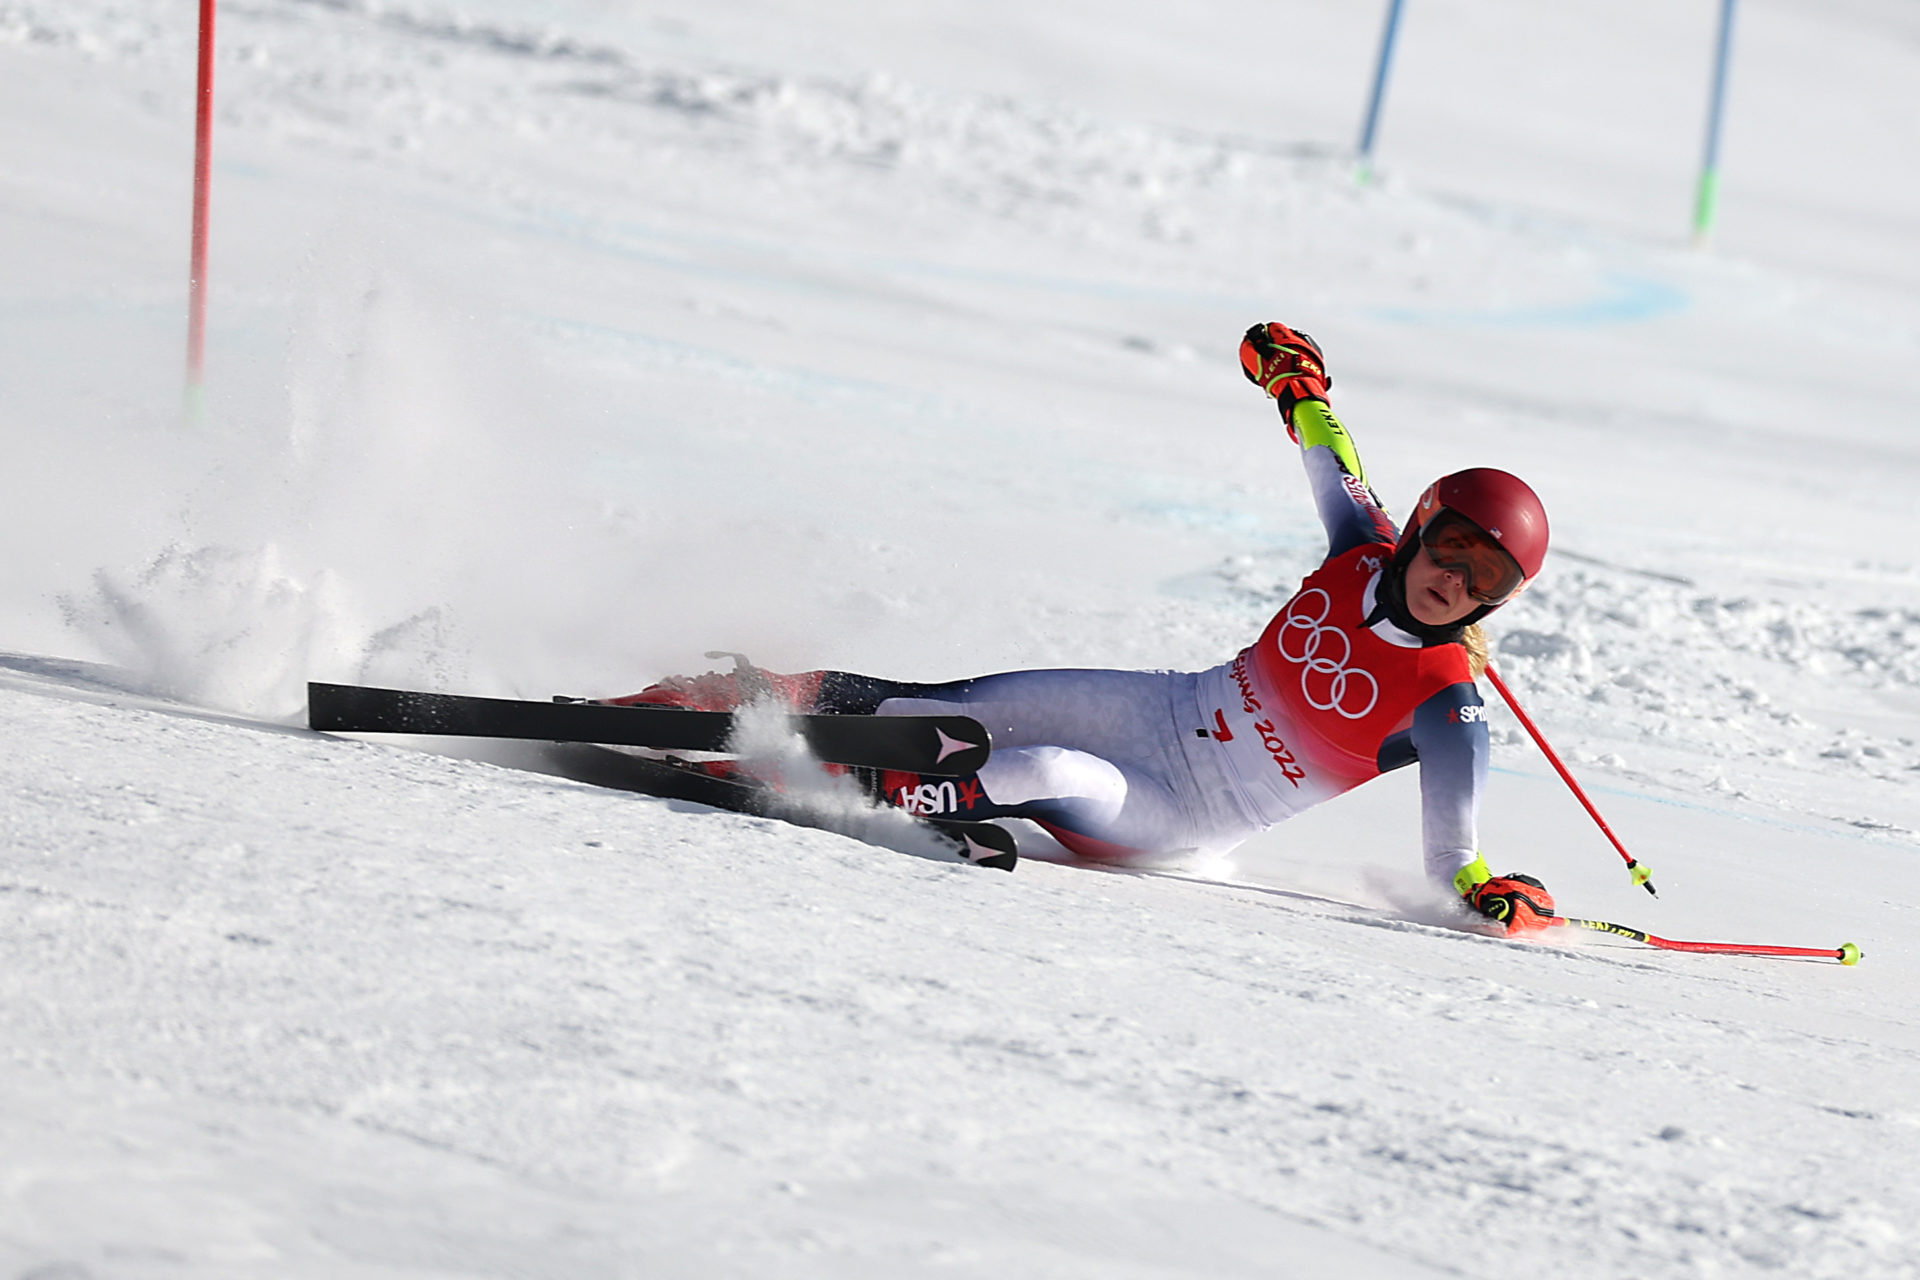 Slalom: Giant slalom, Mikaela Shiffrin, Beijing 2022 Winter Olympics, Alpine skiing. 1920x1280 HD Wallpaper.